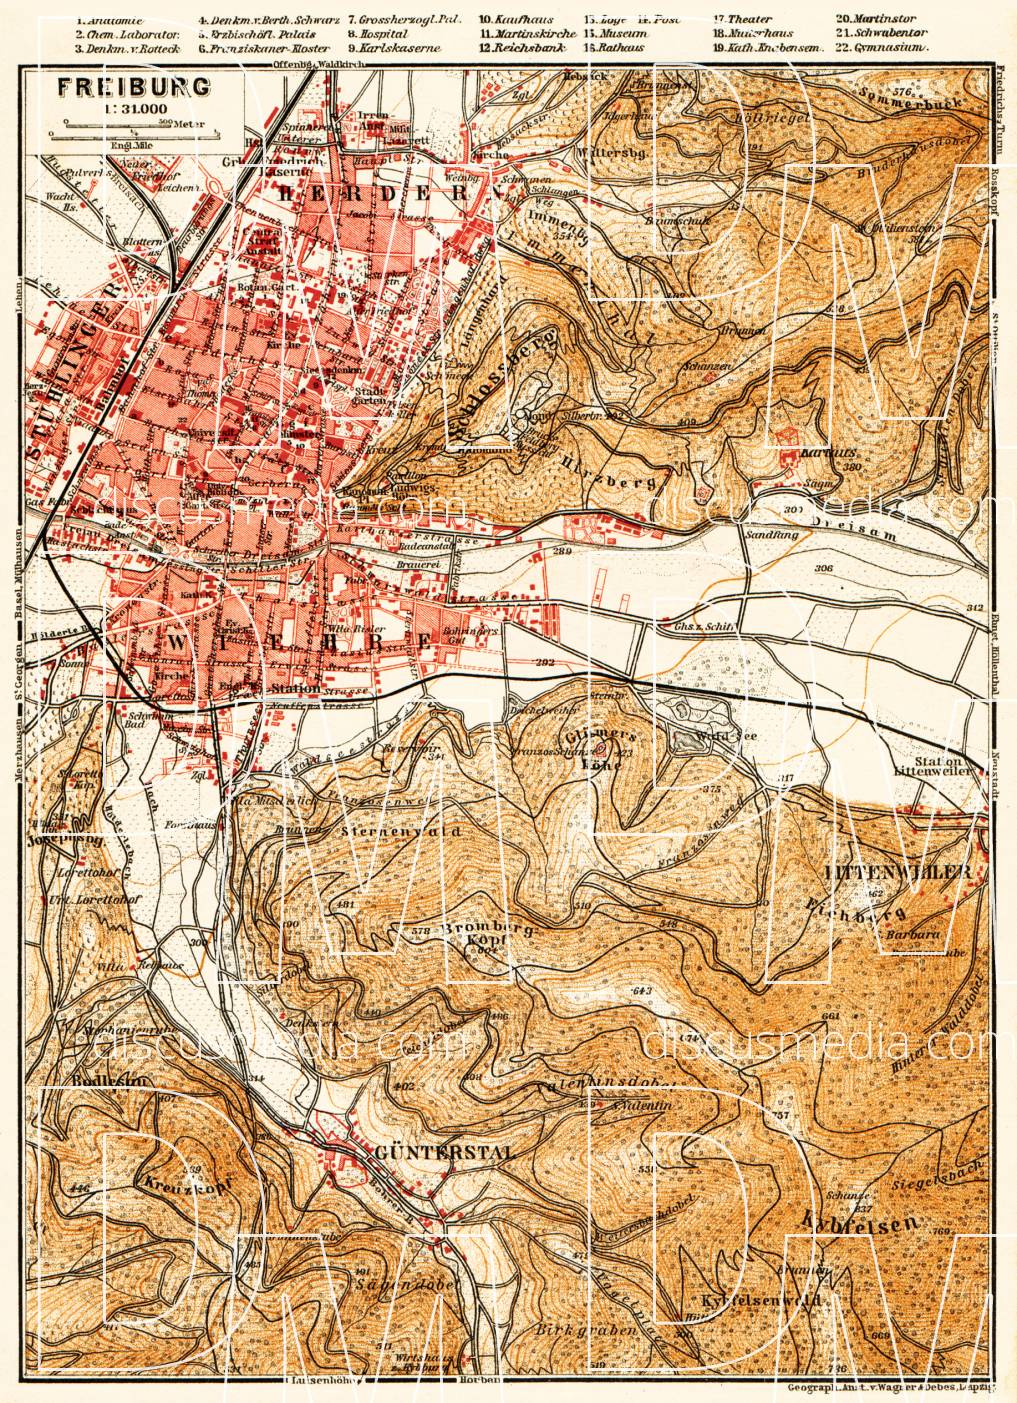 Old map of the vicinity of Freiburg im Breisgau in 1905. Buy vintage